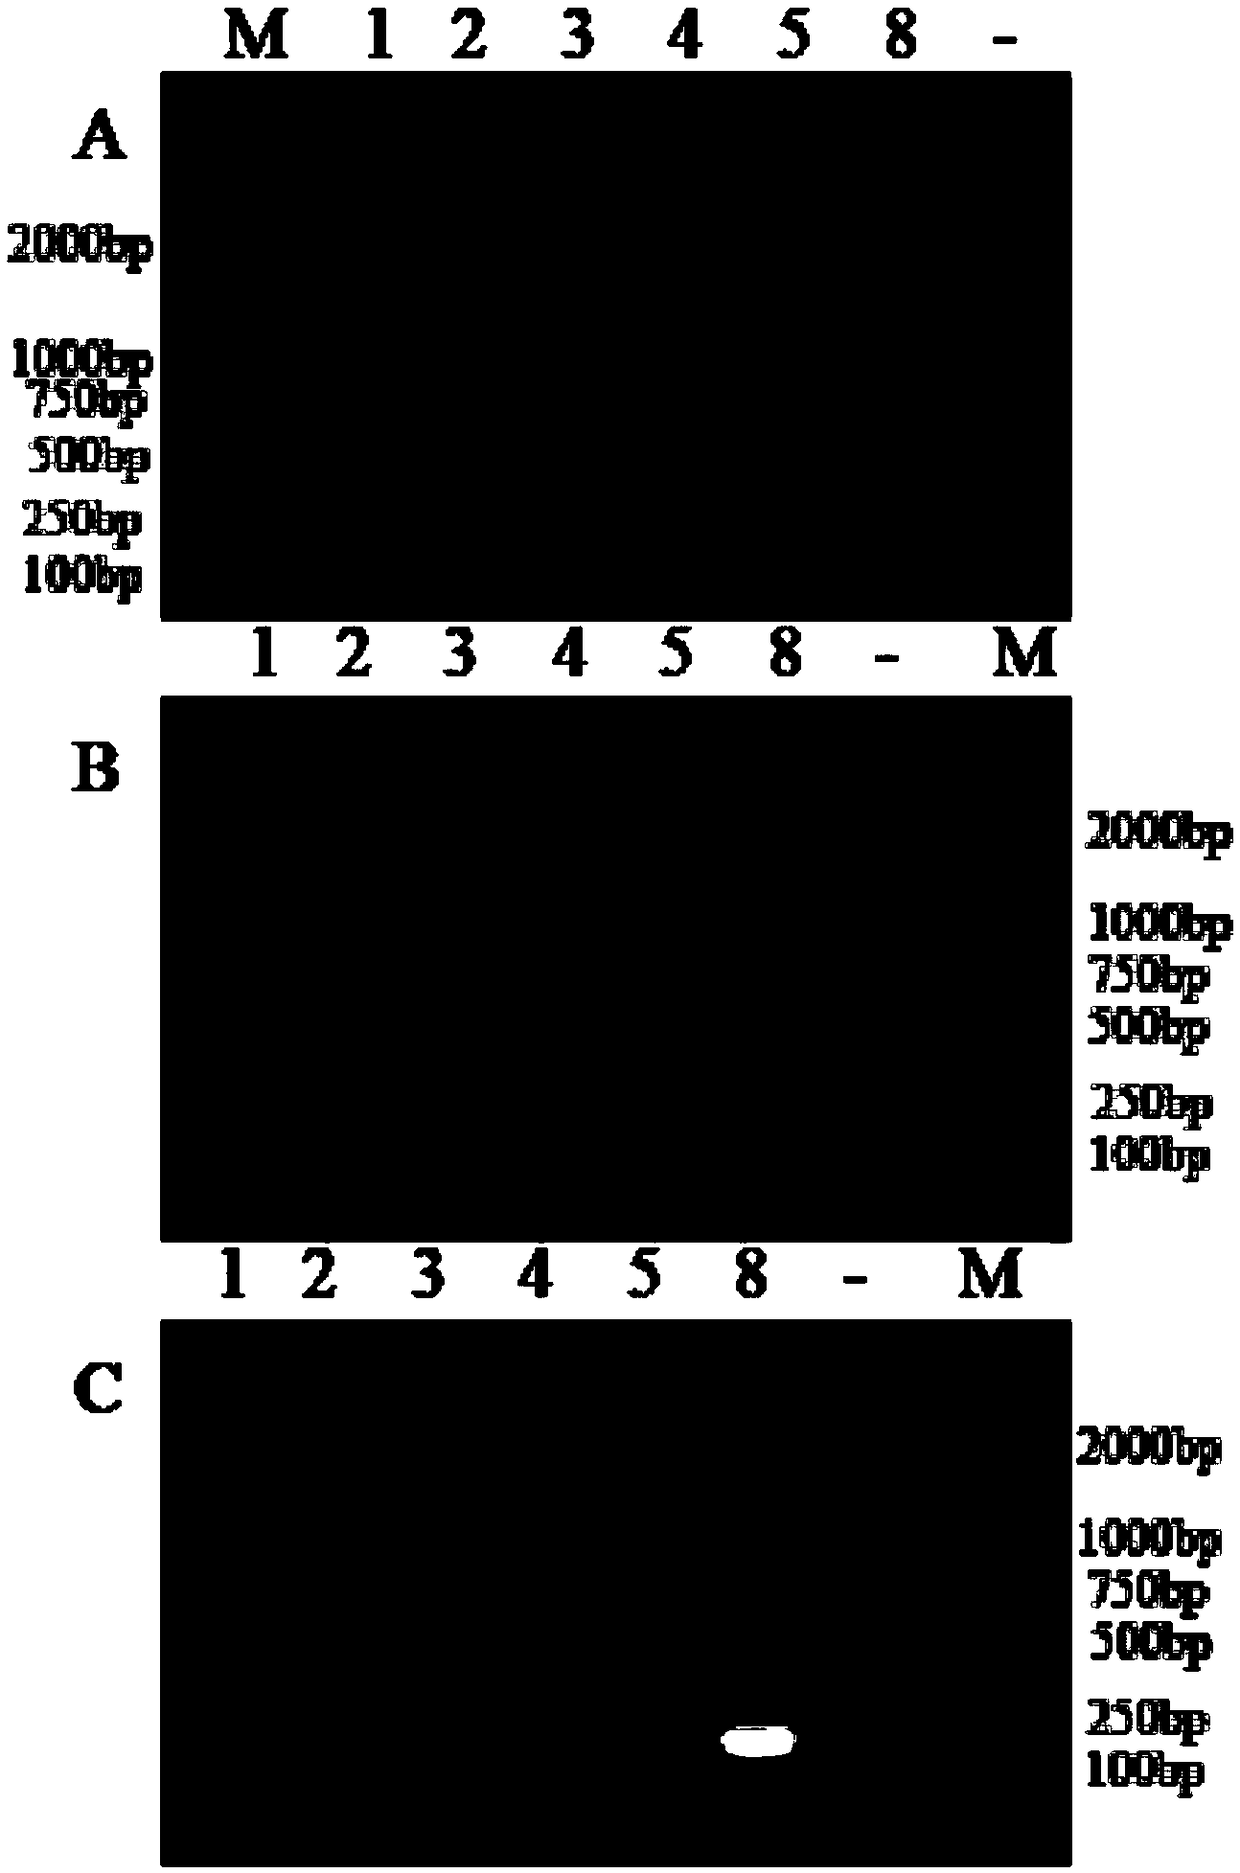 Fluorescent quantitative PCR detection method for drug resistance gene mcr (mobile colistin resistance)-4/5/8